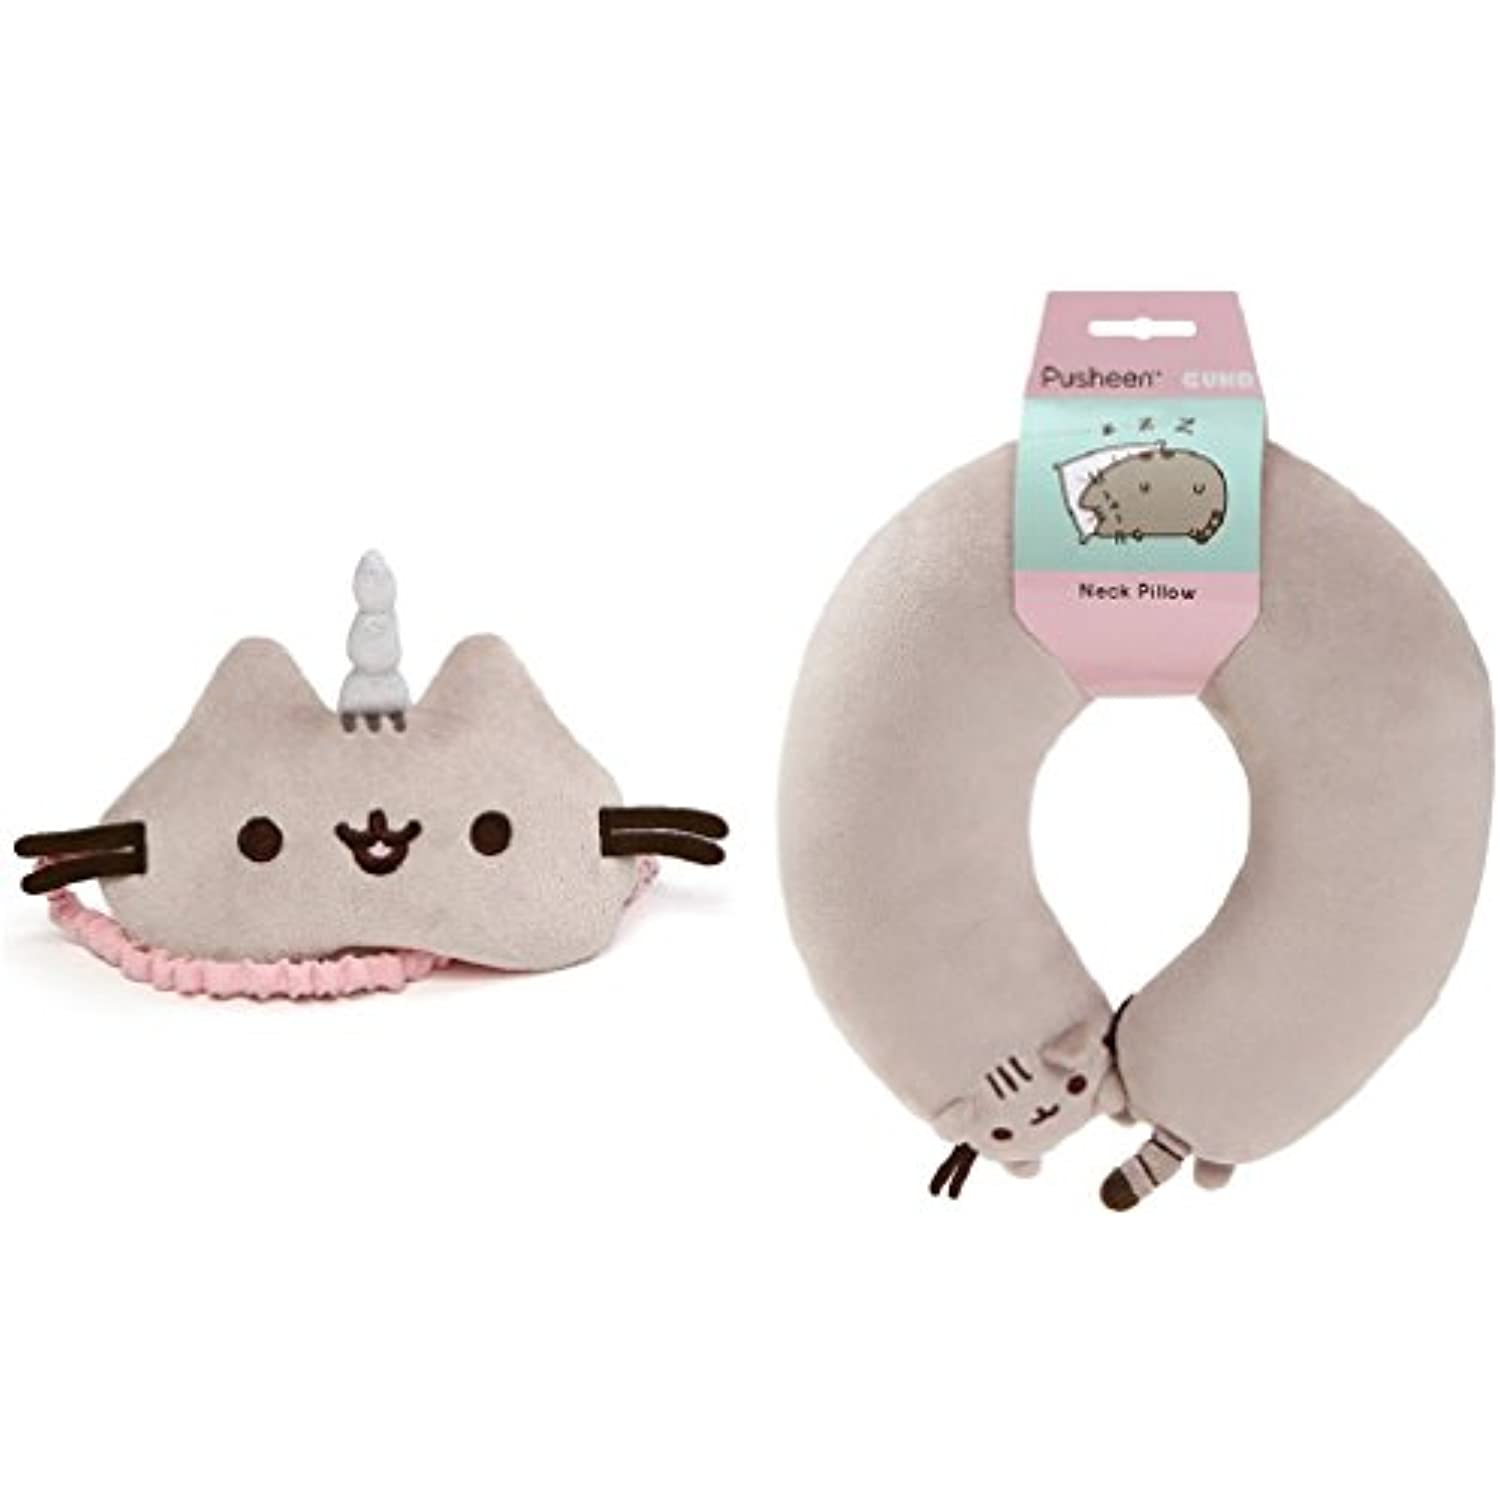 GUND Magical Kitties Pusheenicorn Sleep Mask Bundle with Classic Pusheen Neck Pillow